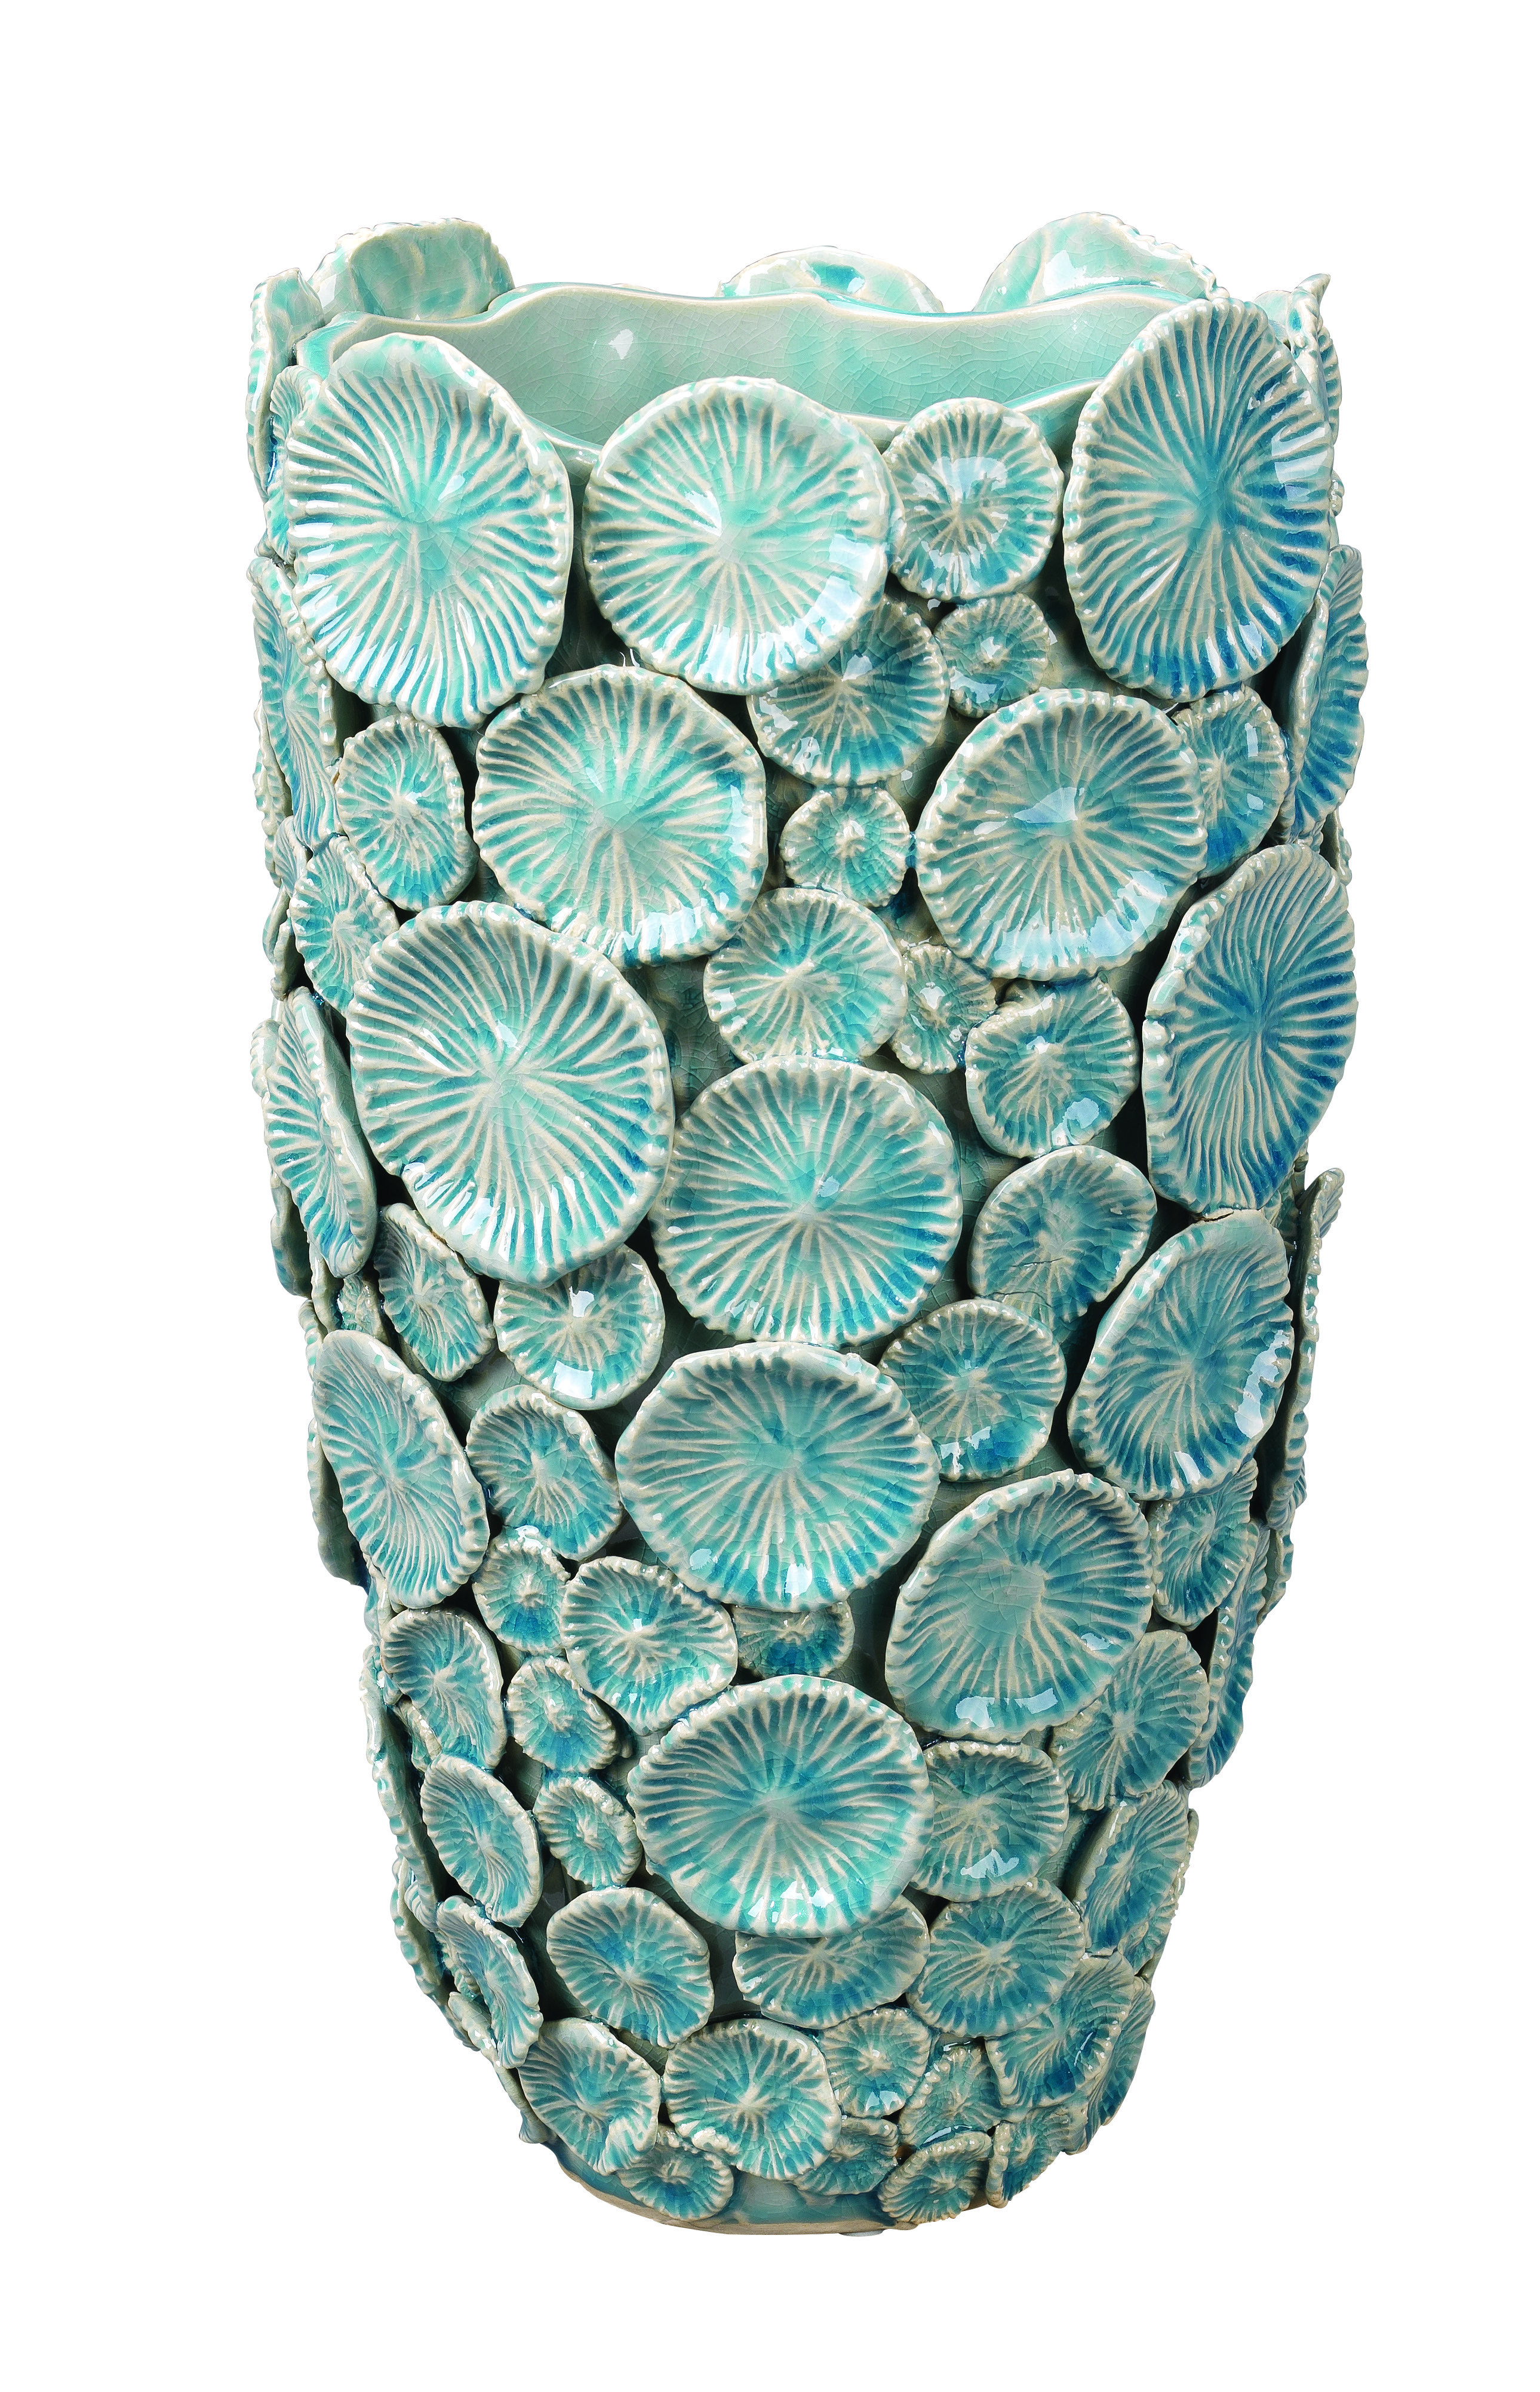 Mermaid blue ceramic vase from Jamie Young